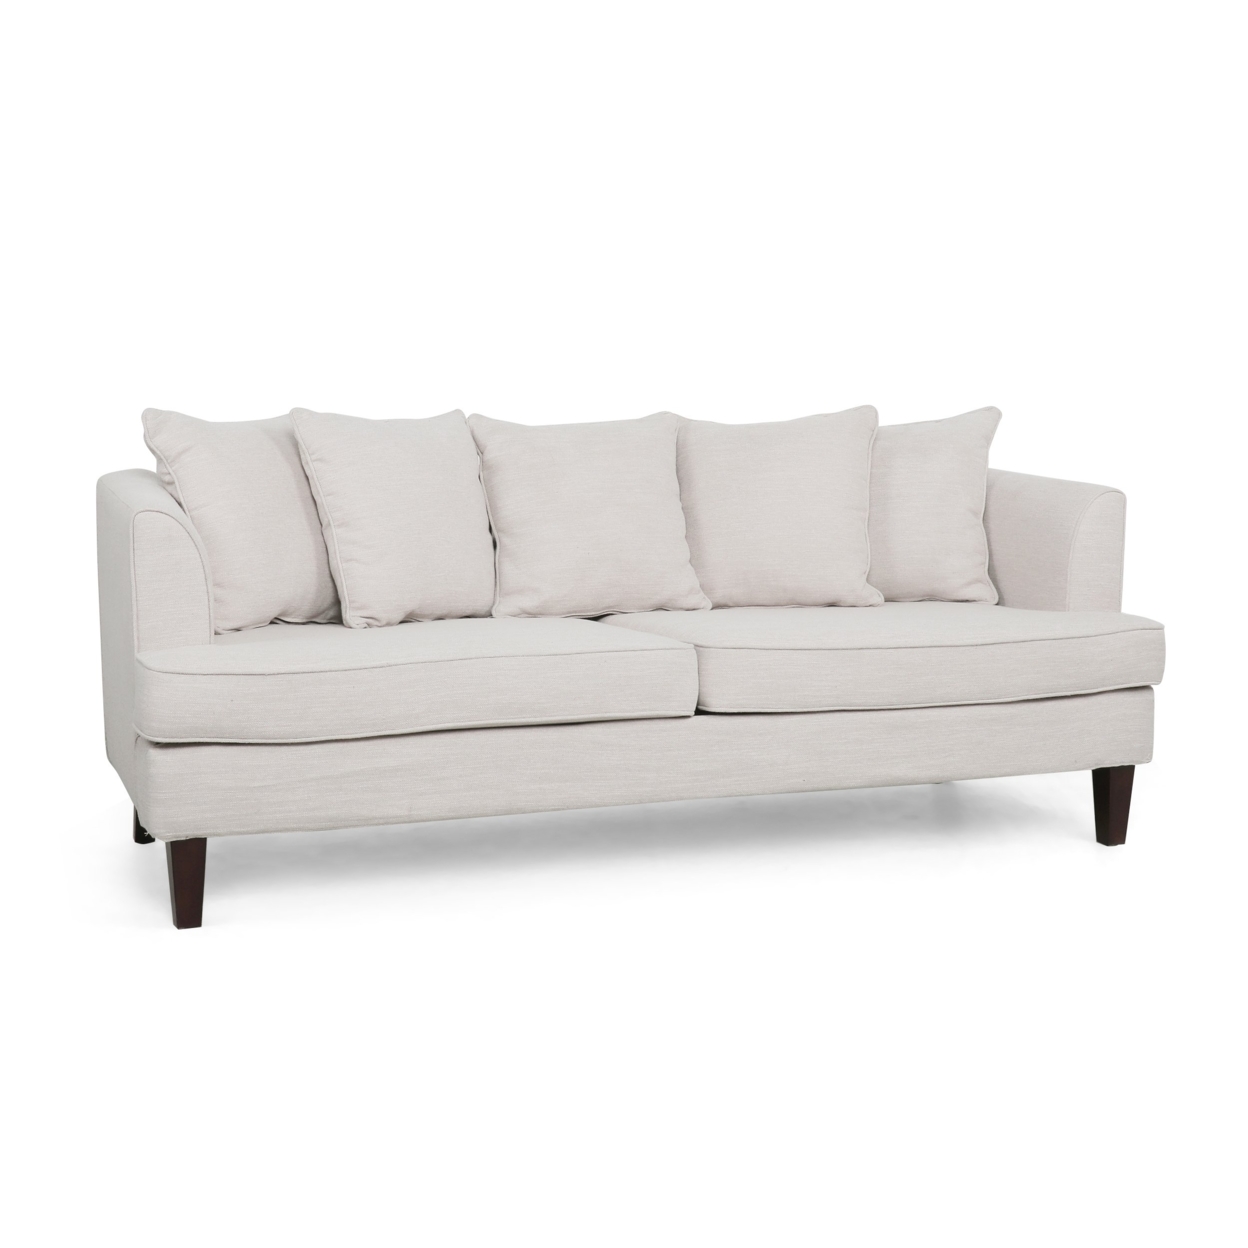 Lilburn Contemporary Pillow Back 3 Seater Sofa - Espresso/beige